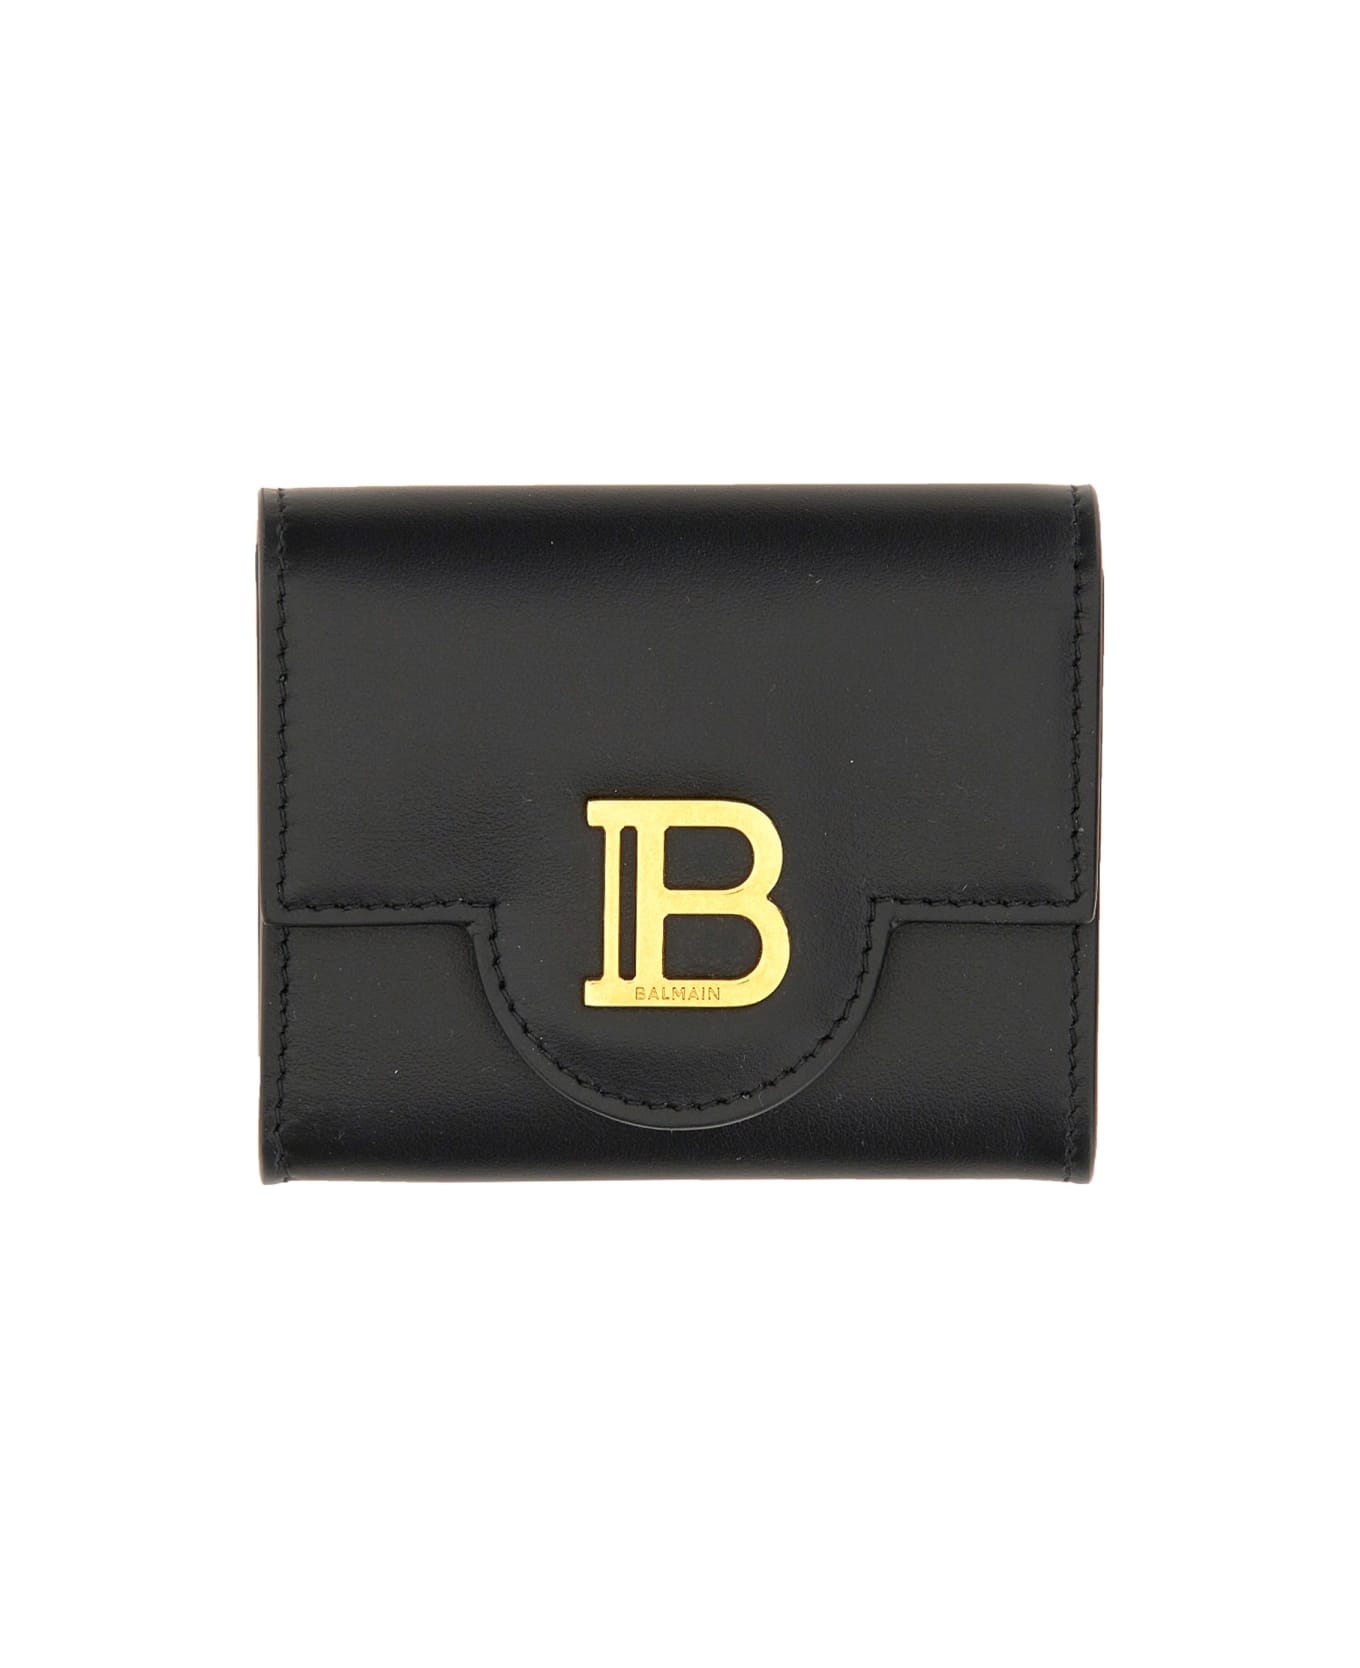 Balmain "b-buzz" Wallet - BLACK